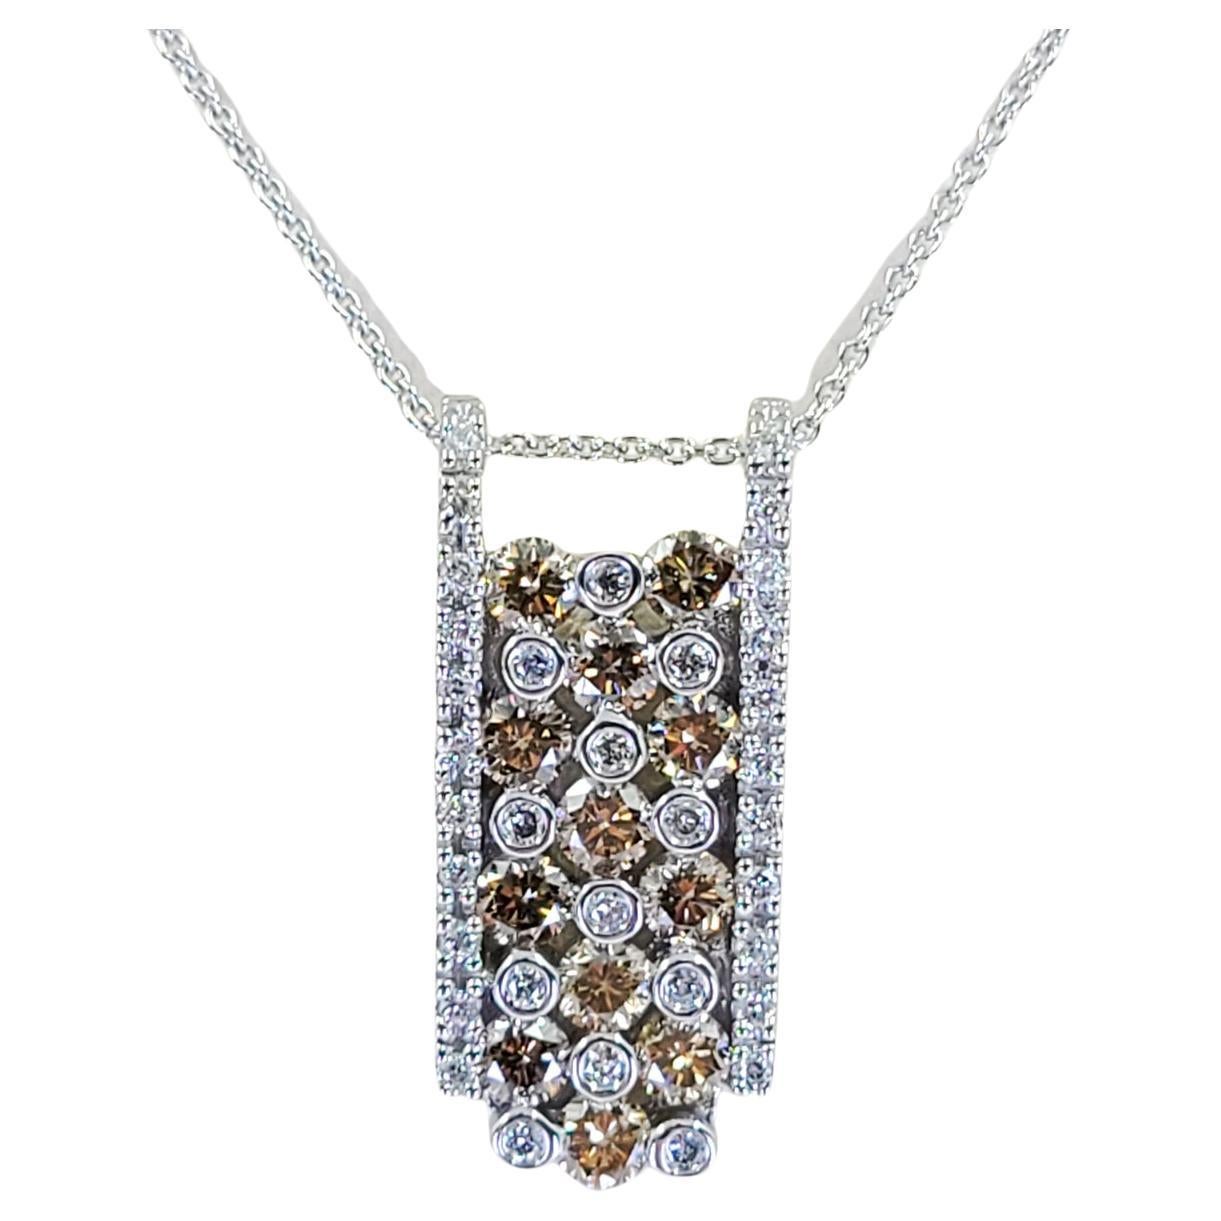 Chocolate Diamond Pendant Necklace in White Gold